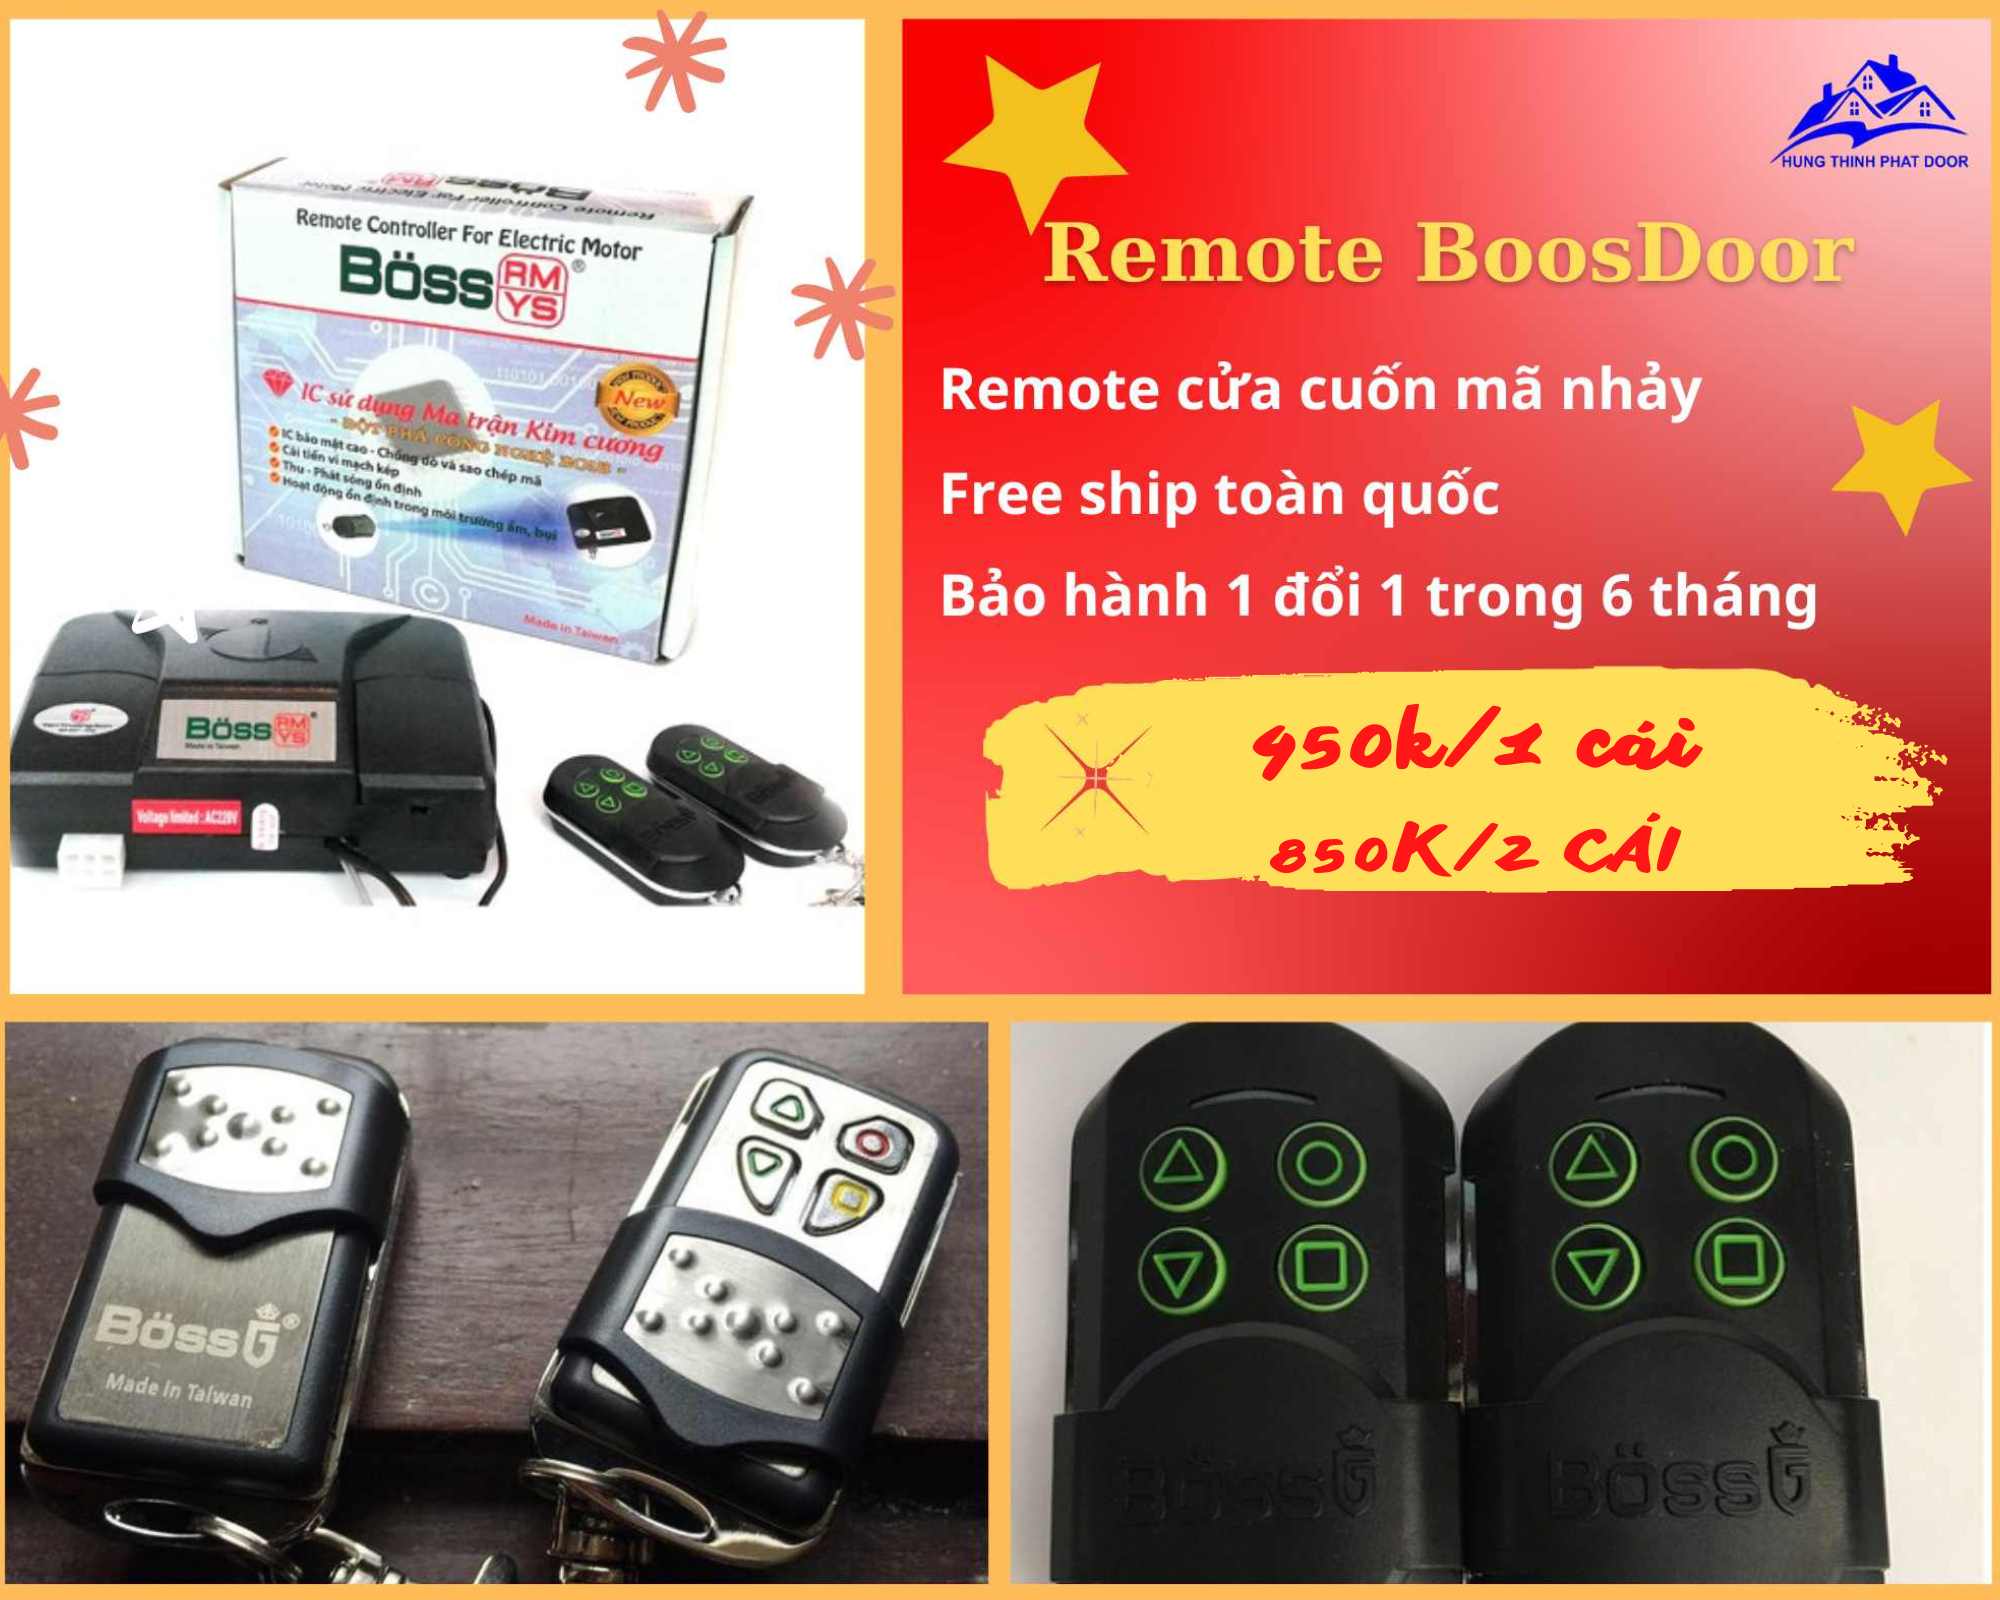 Remote Cửa Cuốn Bossdoor – Remote Nhập Khẩu Từ Đài Loan